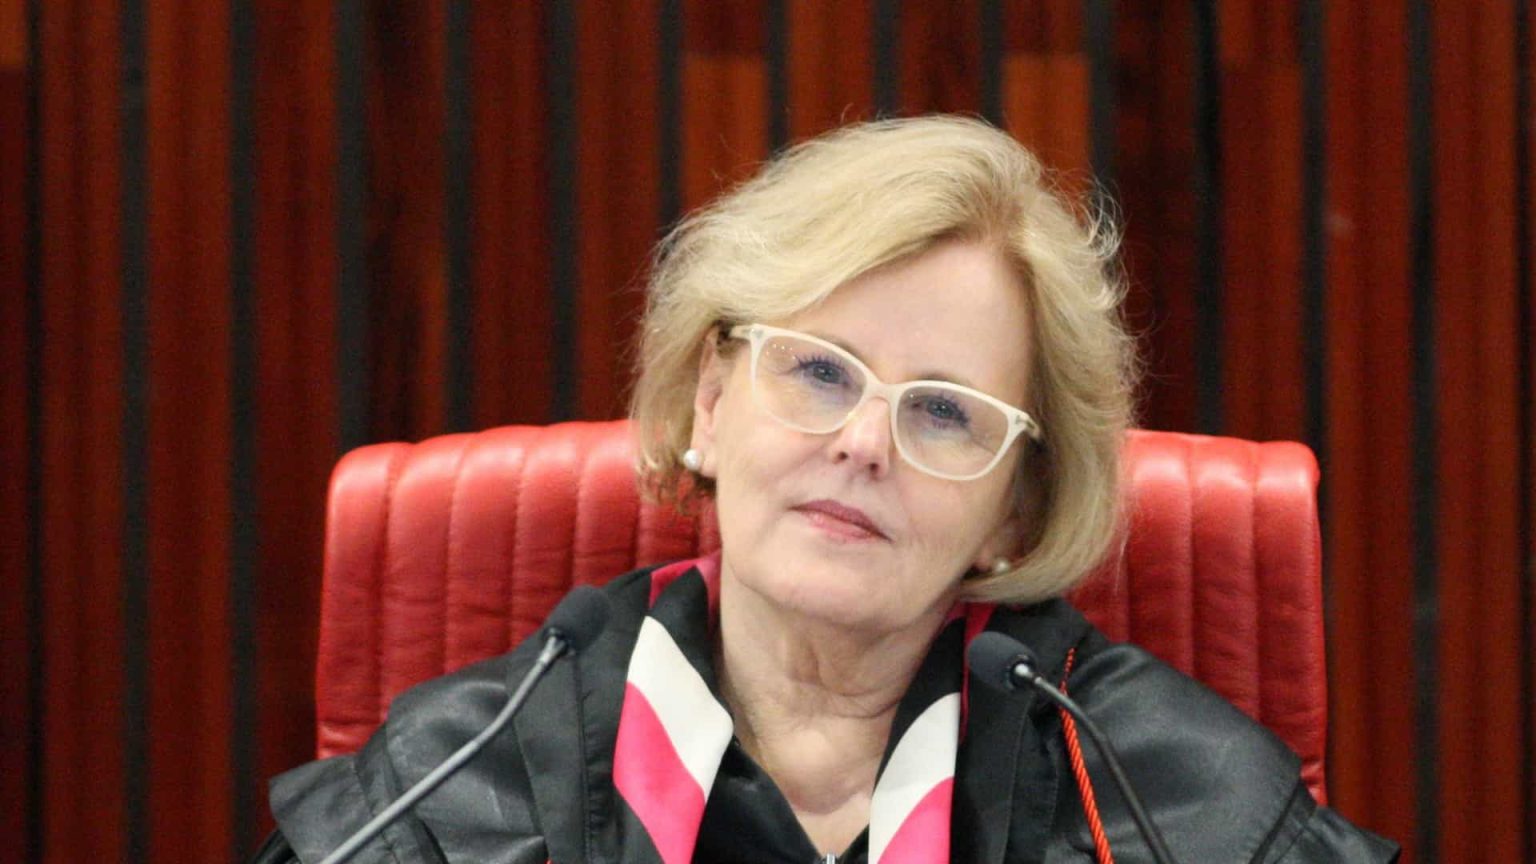 Rosa cobra PF sobre inquérito que investiga Bolsonaro no caso Covaxin